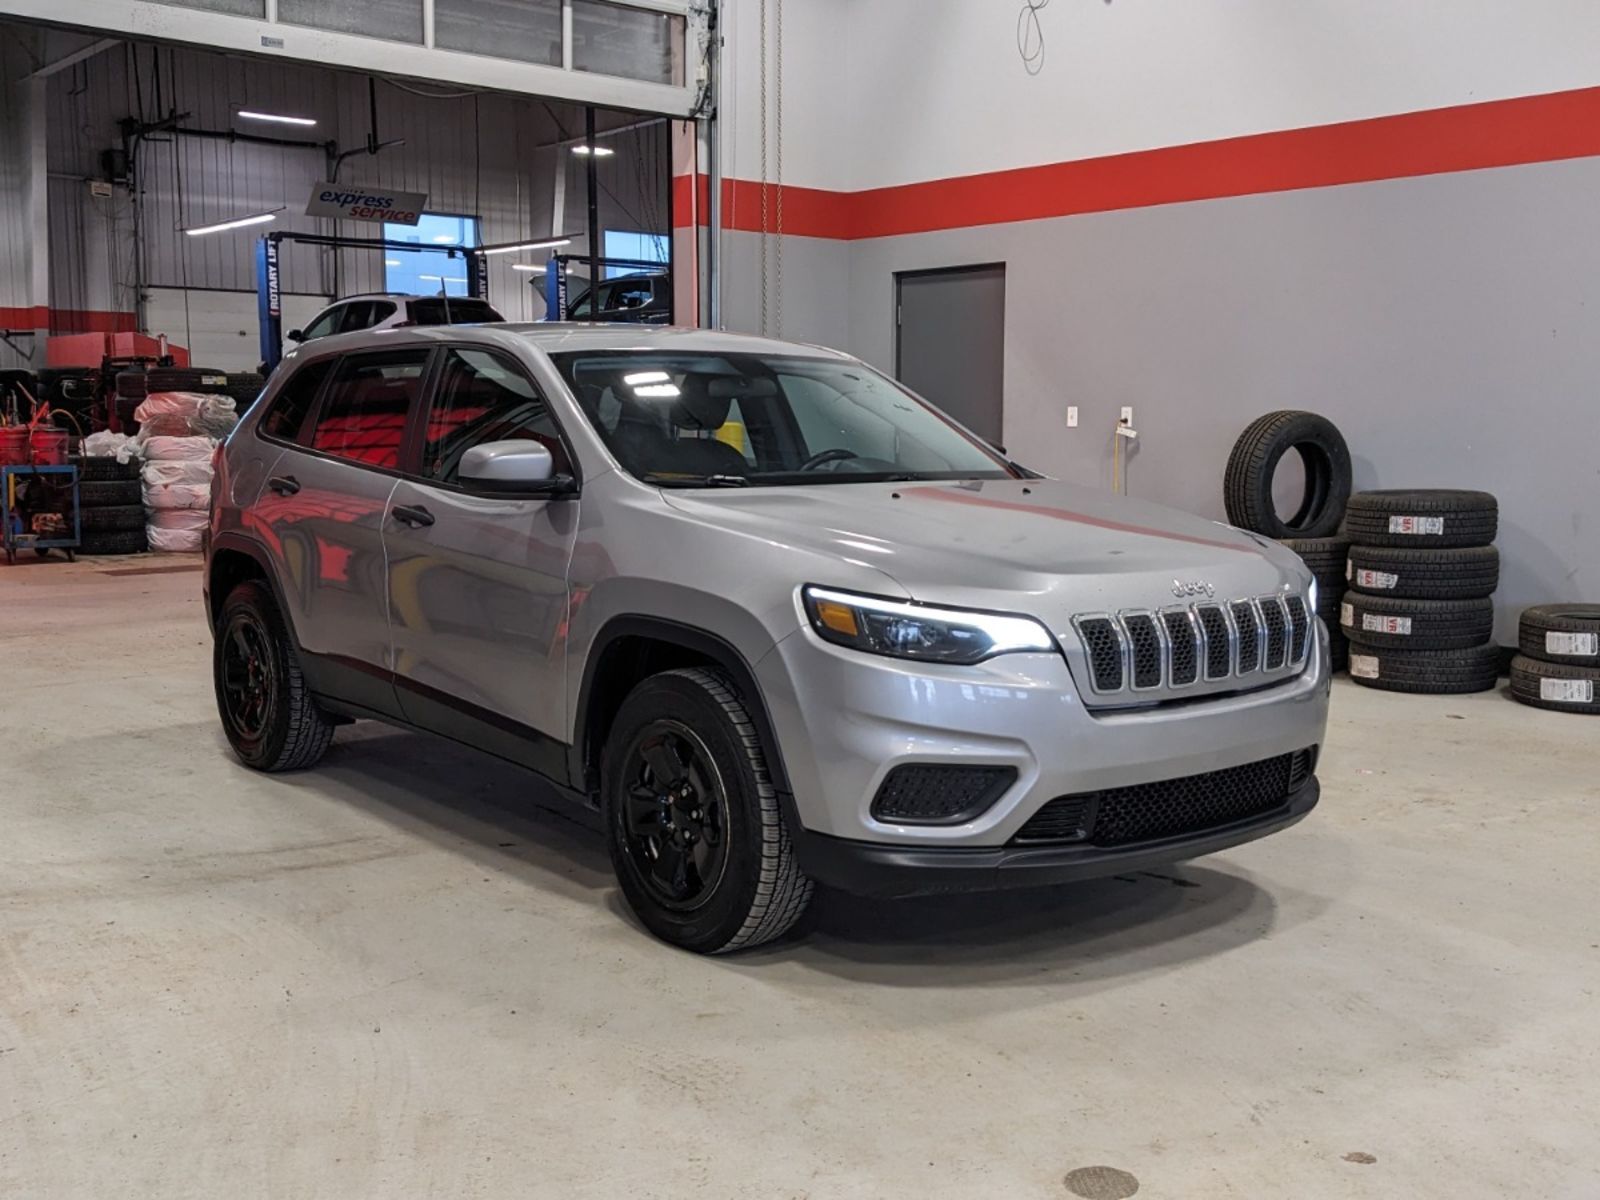 2019 Jeep Cherokee Sport - 4x4, back-up camera, bluetooth